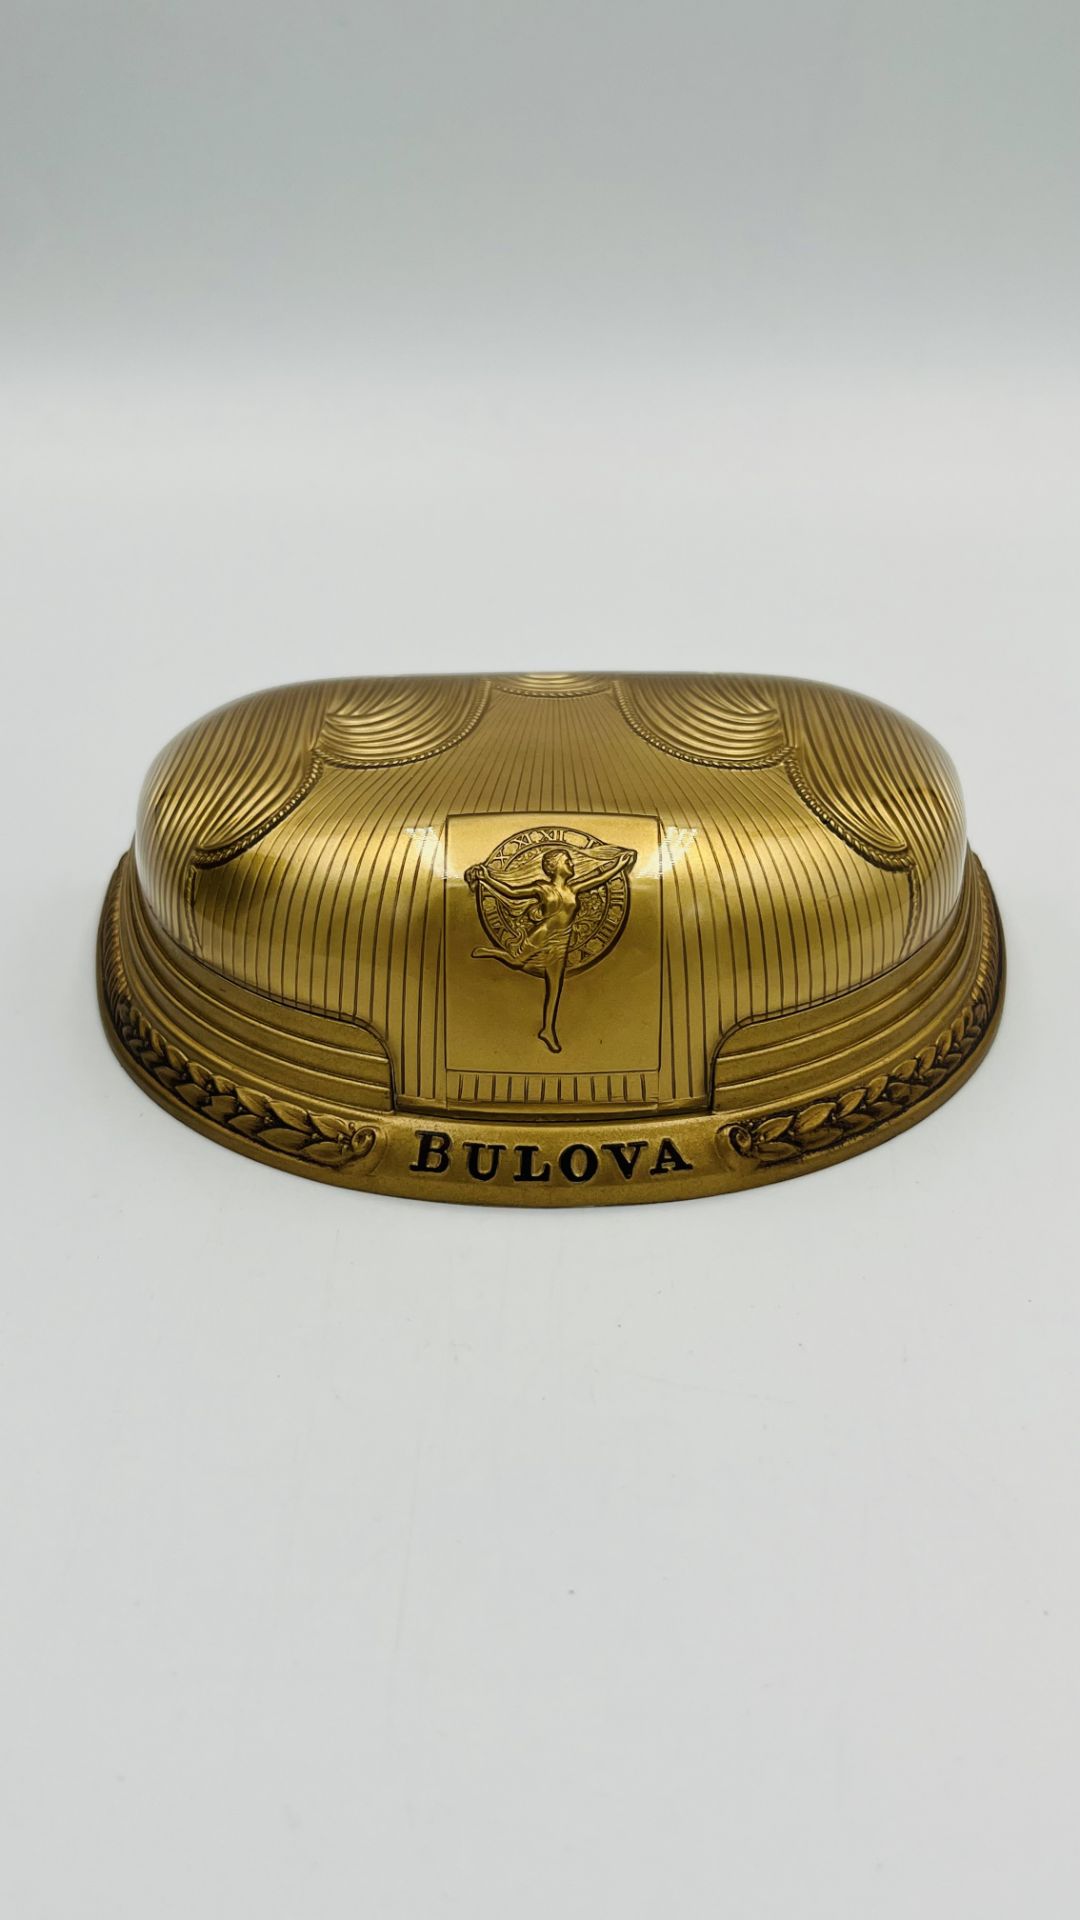 Bulova "tank" style 10k rolled gold cased manual wind wrist watch - Image 3 of 7